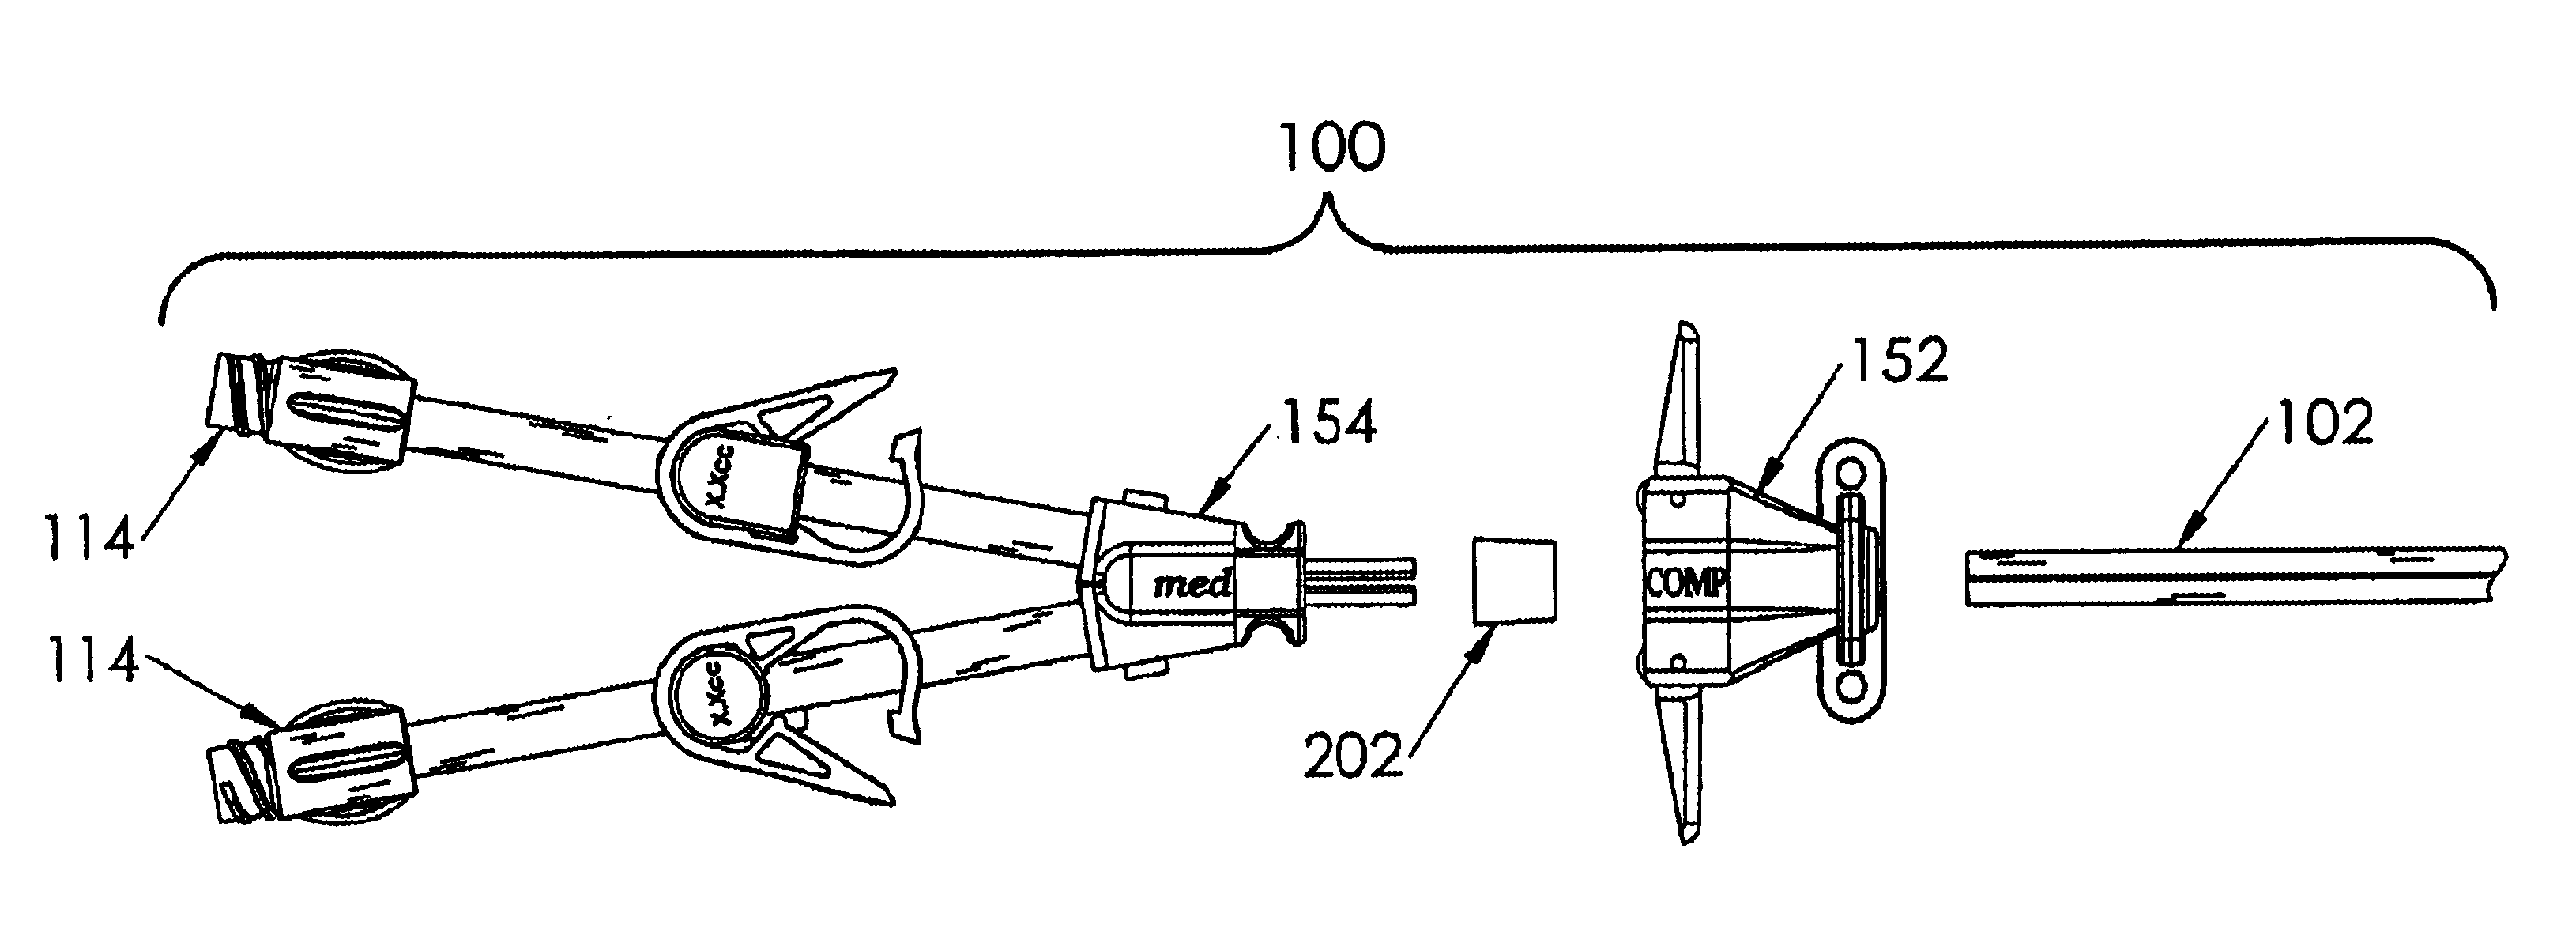 Multi-lumen catheter with detachable locking hub